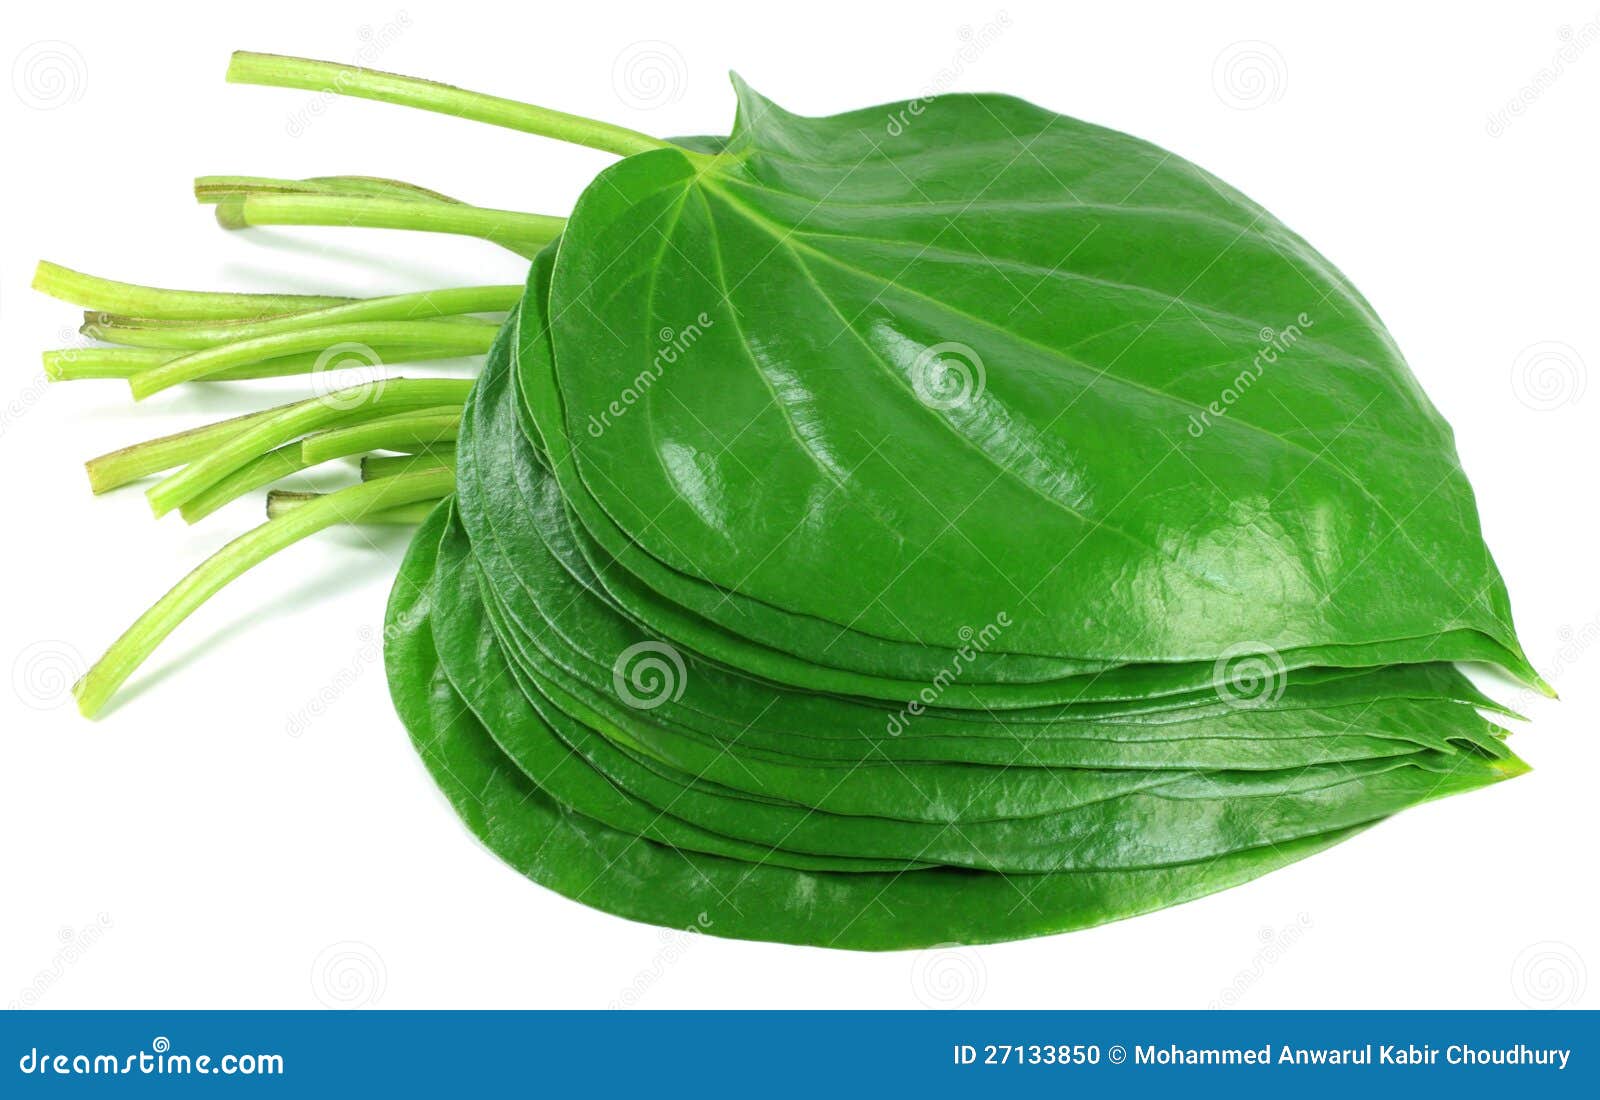 Edible betel leaf stock photo. Image of marriage, habit